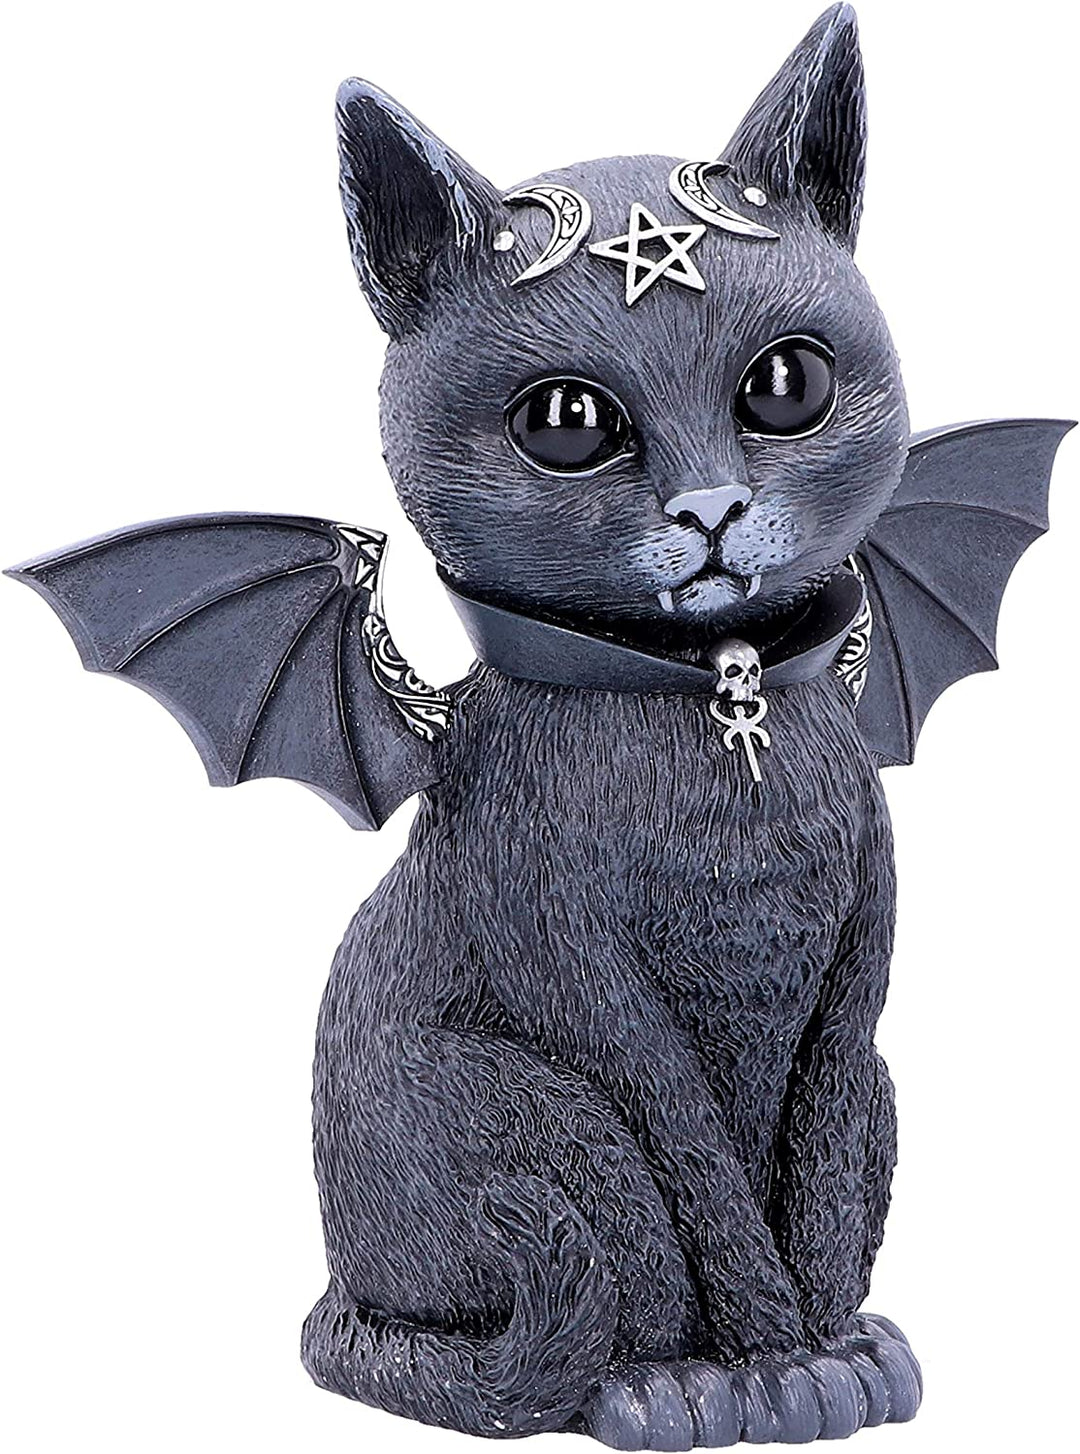 Nemesis Now Große geflügelte okkulte Malpuss-Katzenfigur, schwarz, 24 cm